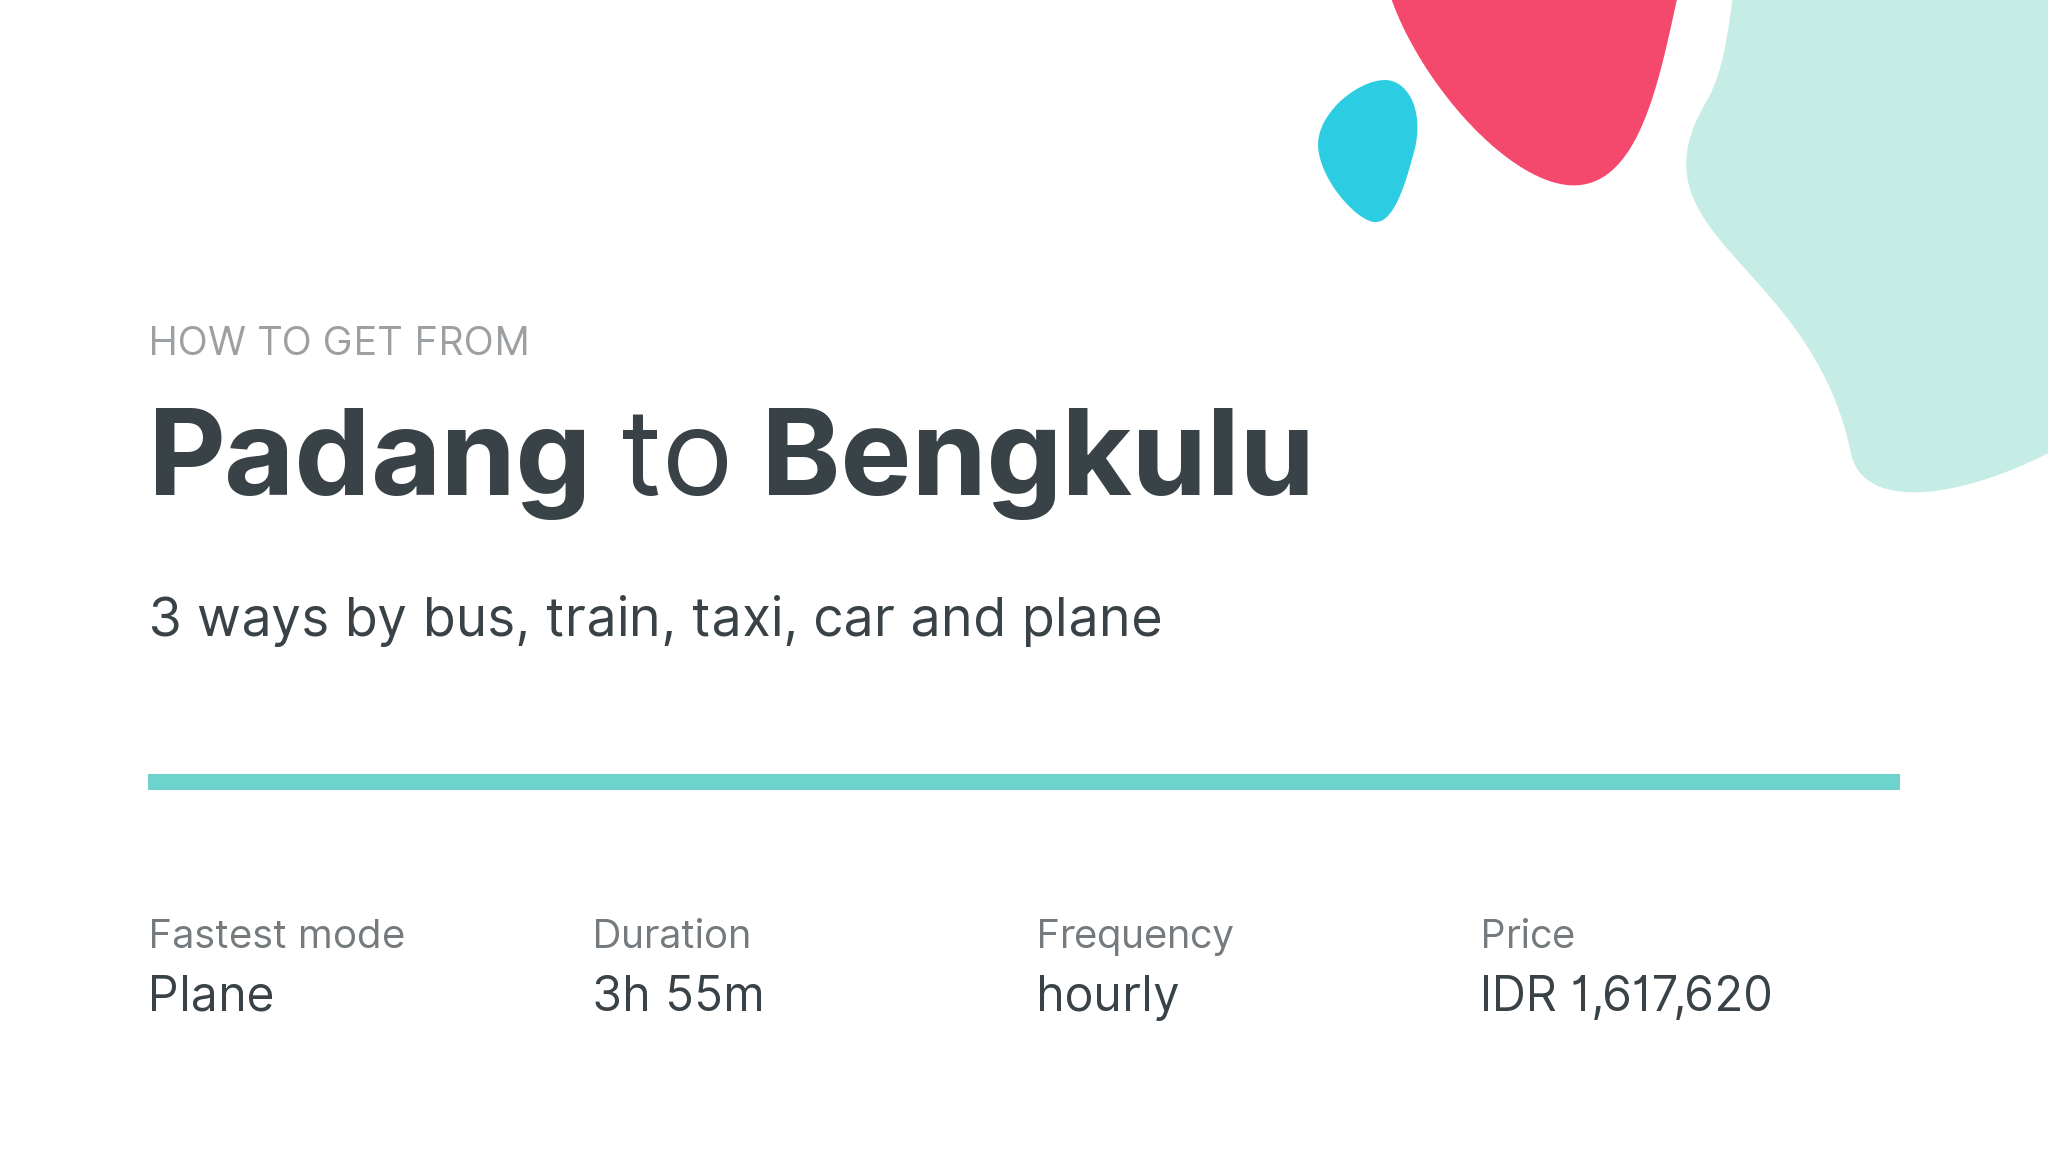 How do I get from Padang to Bengkulu